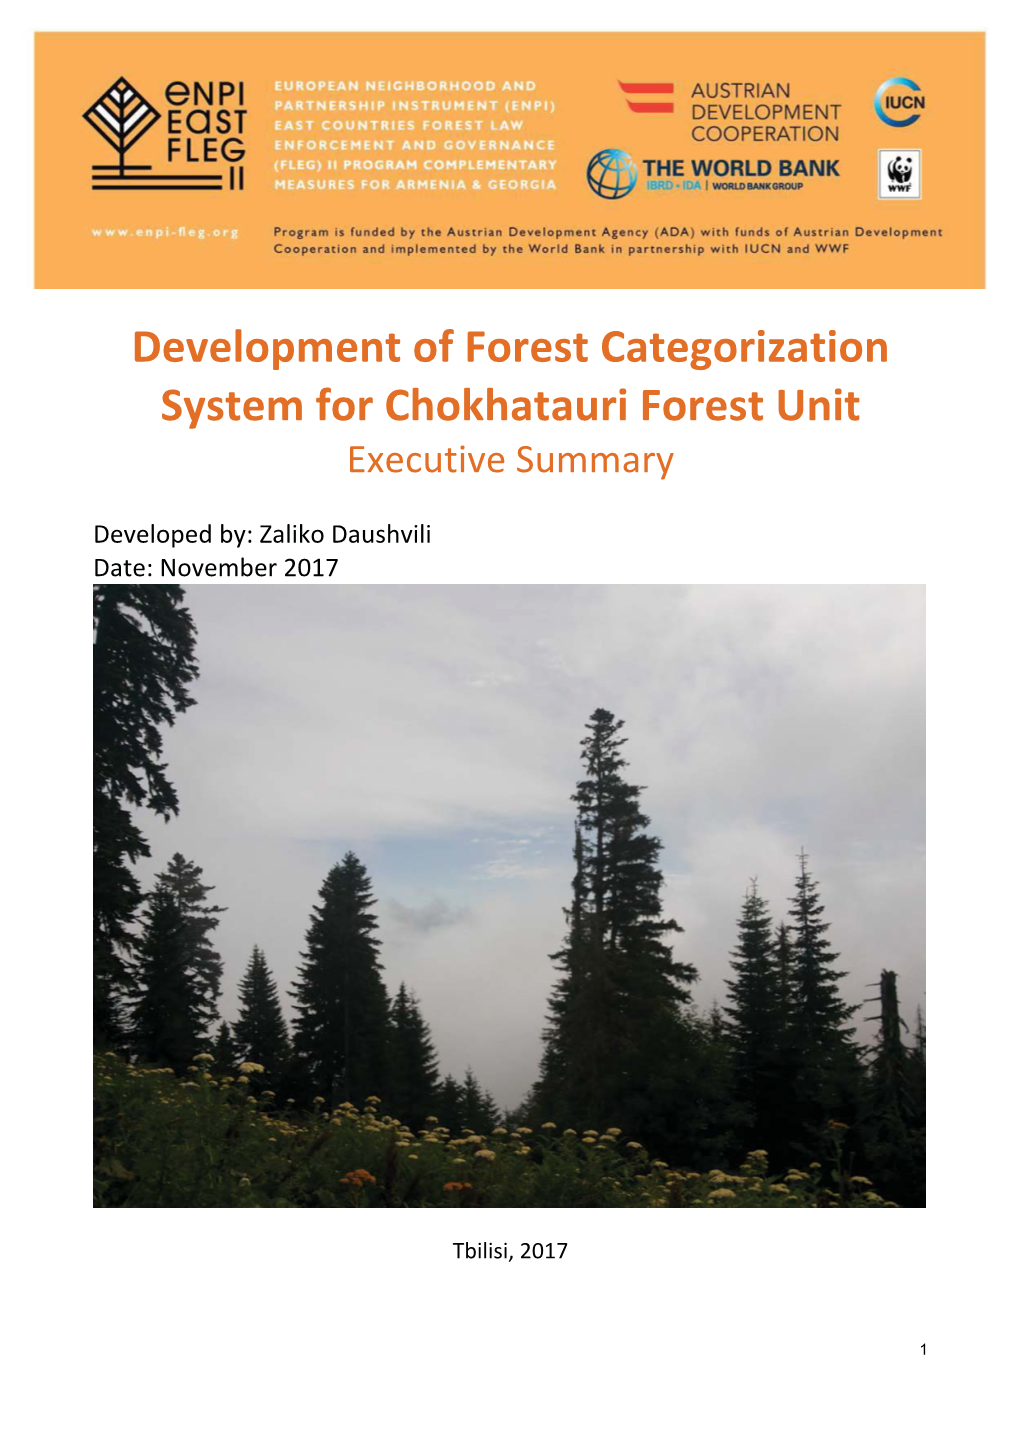 Development of Forest Categorization System for Chokhatauri Forest Unit Executive Summary